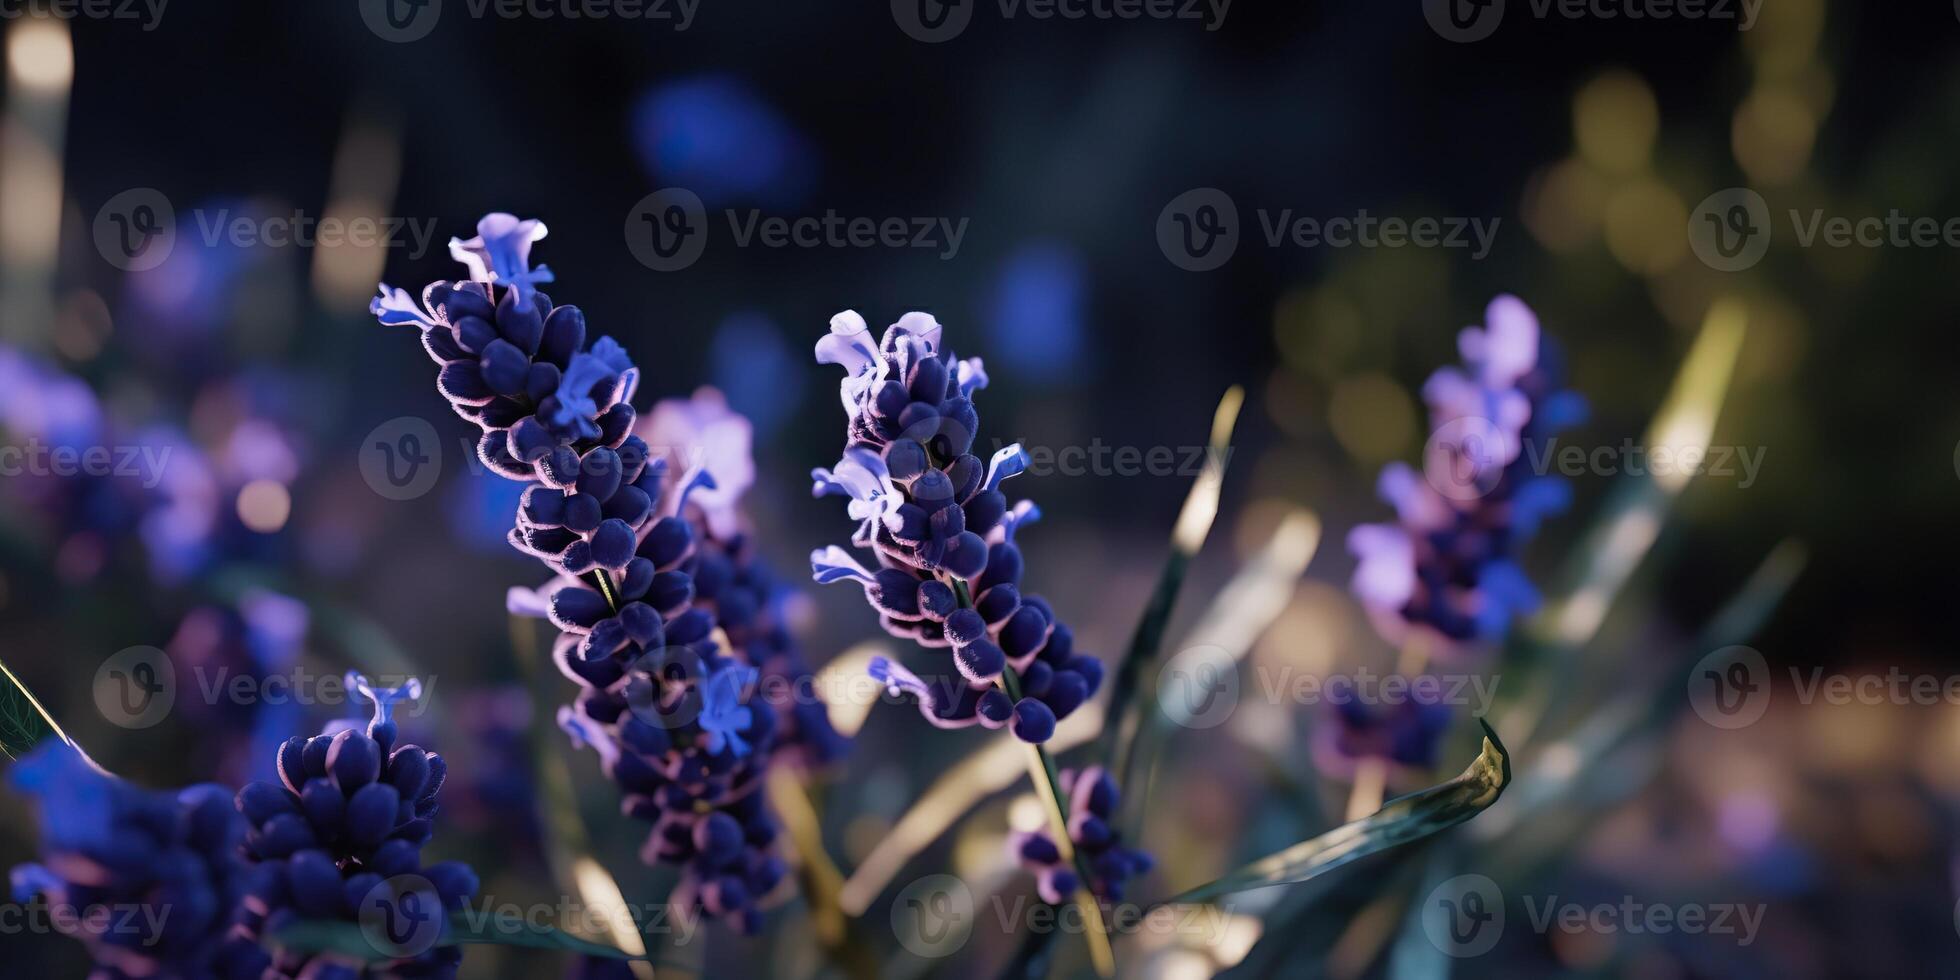 . . Lavender plant flower macro shot photo illustration. Graphic Art